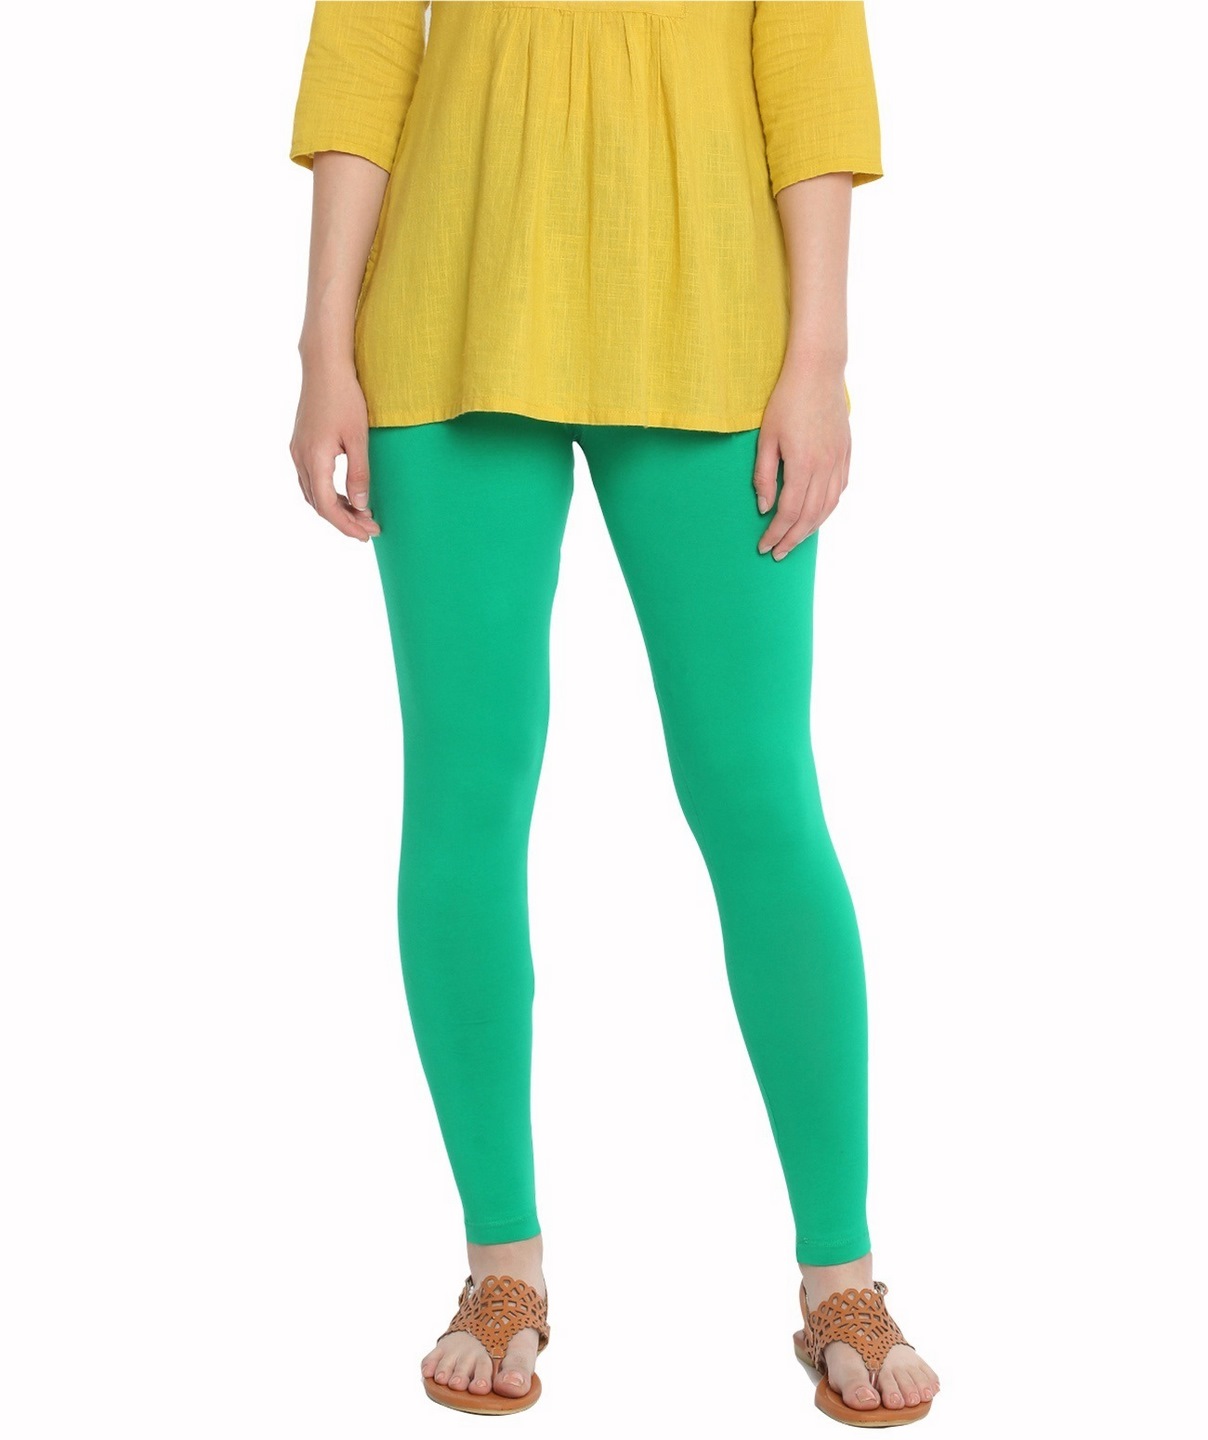 Buy Women's Shiny Satin Lycra Dark Green Color Leggings Small Size at